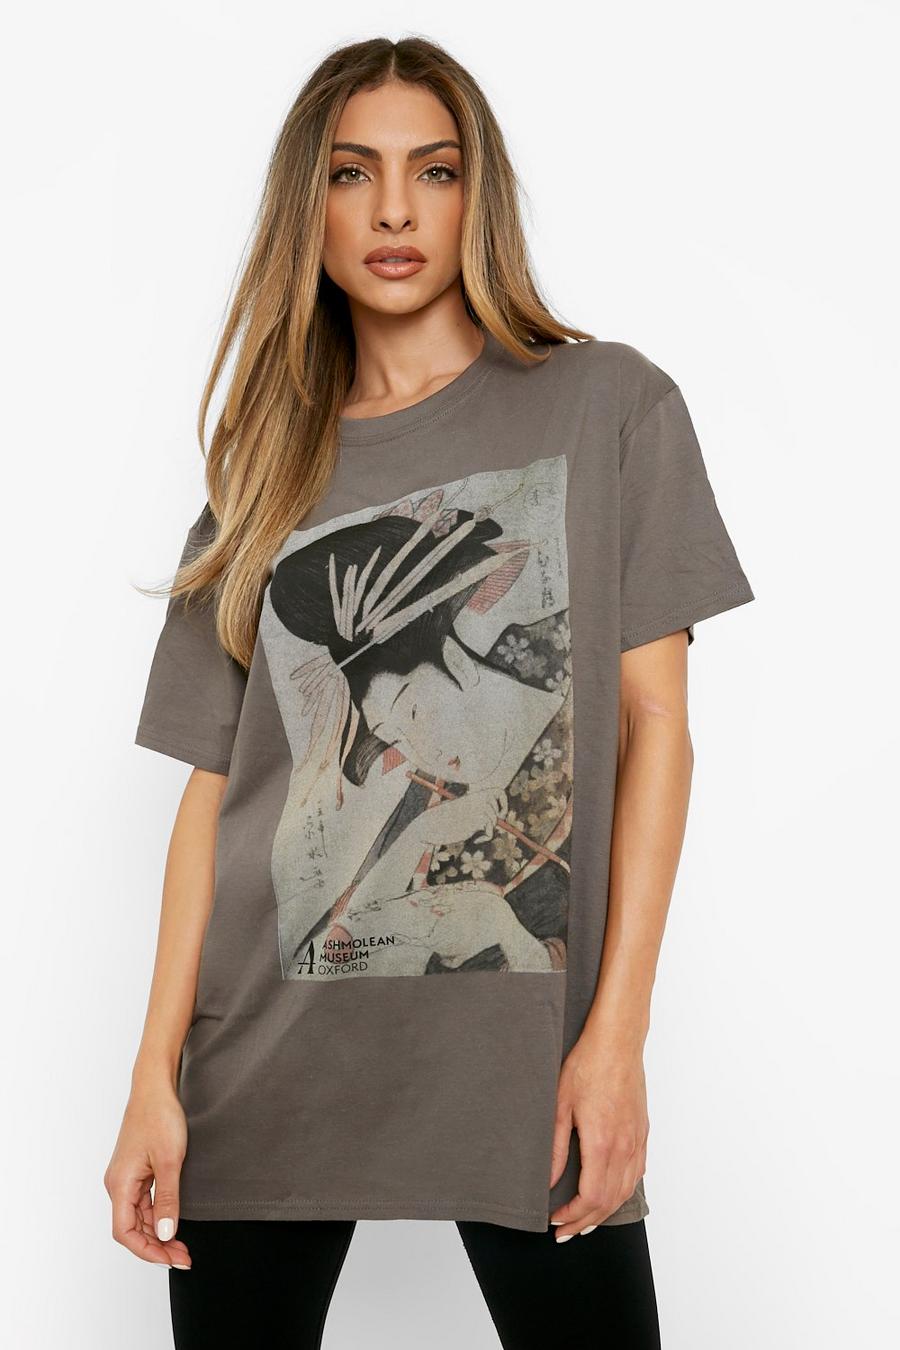 Charcoal grey Art License Oversized T-shirt